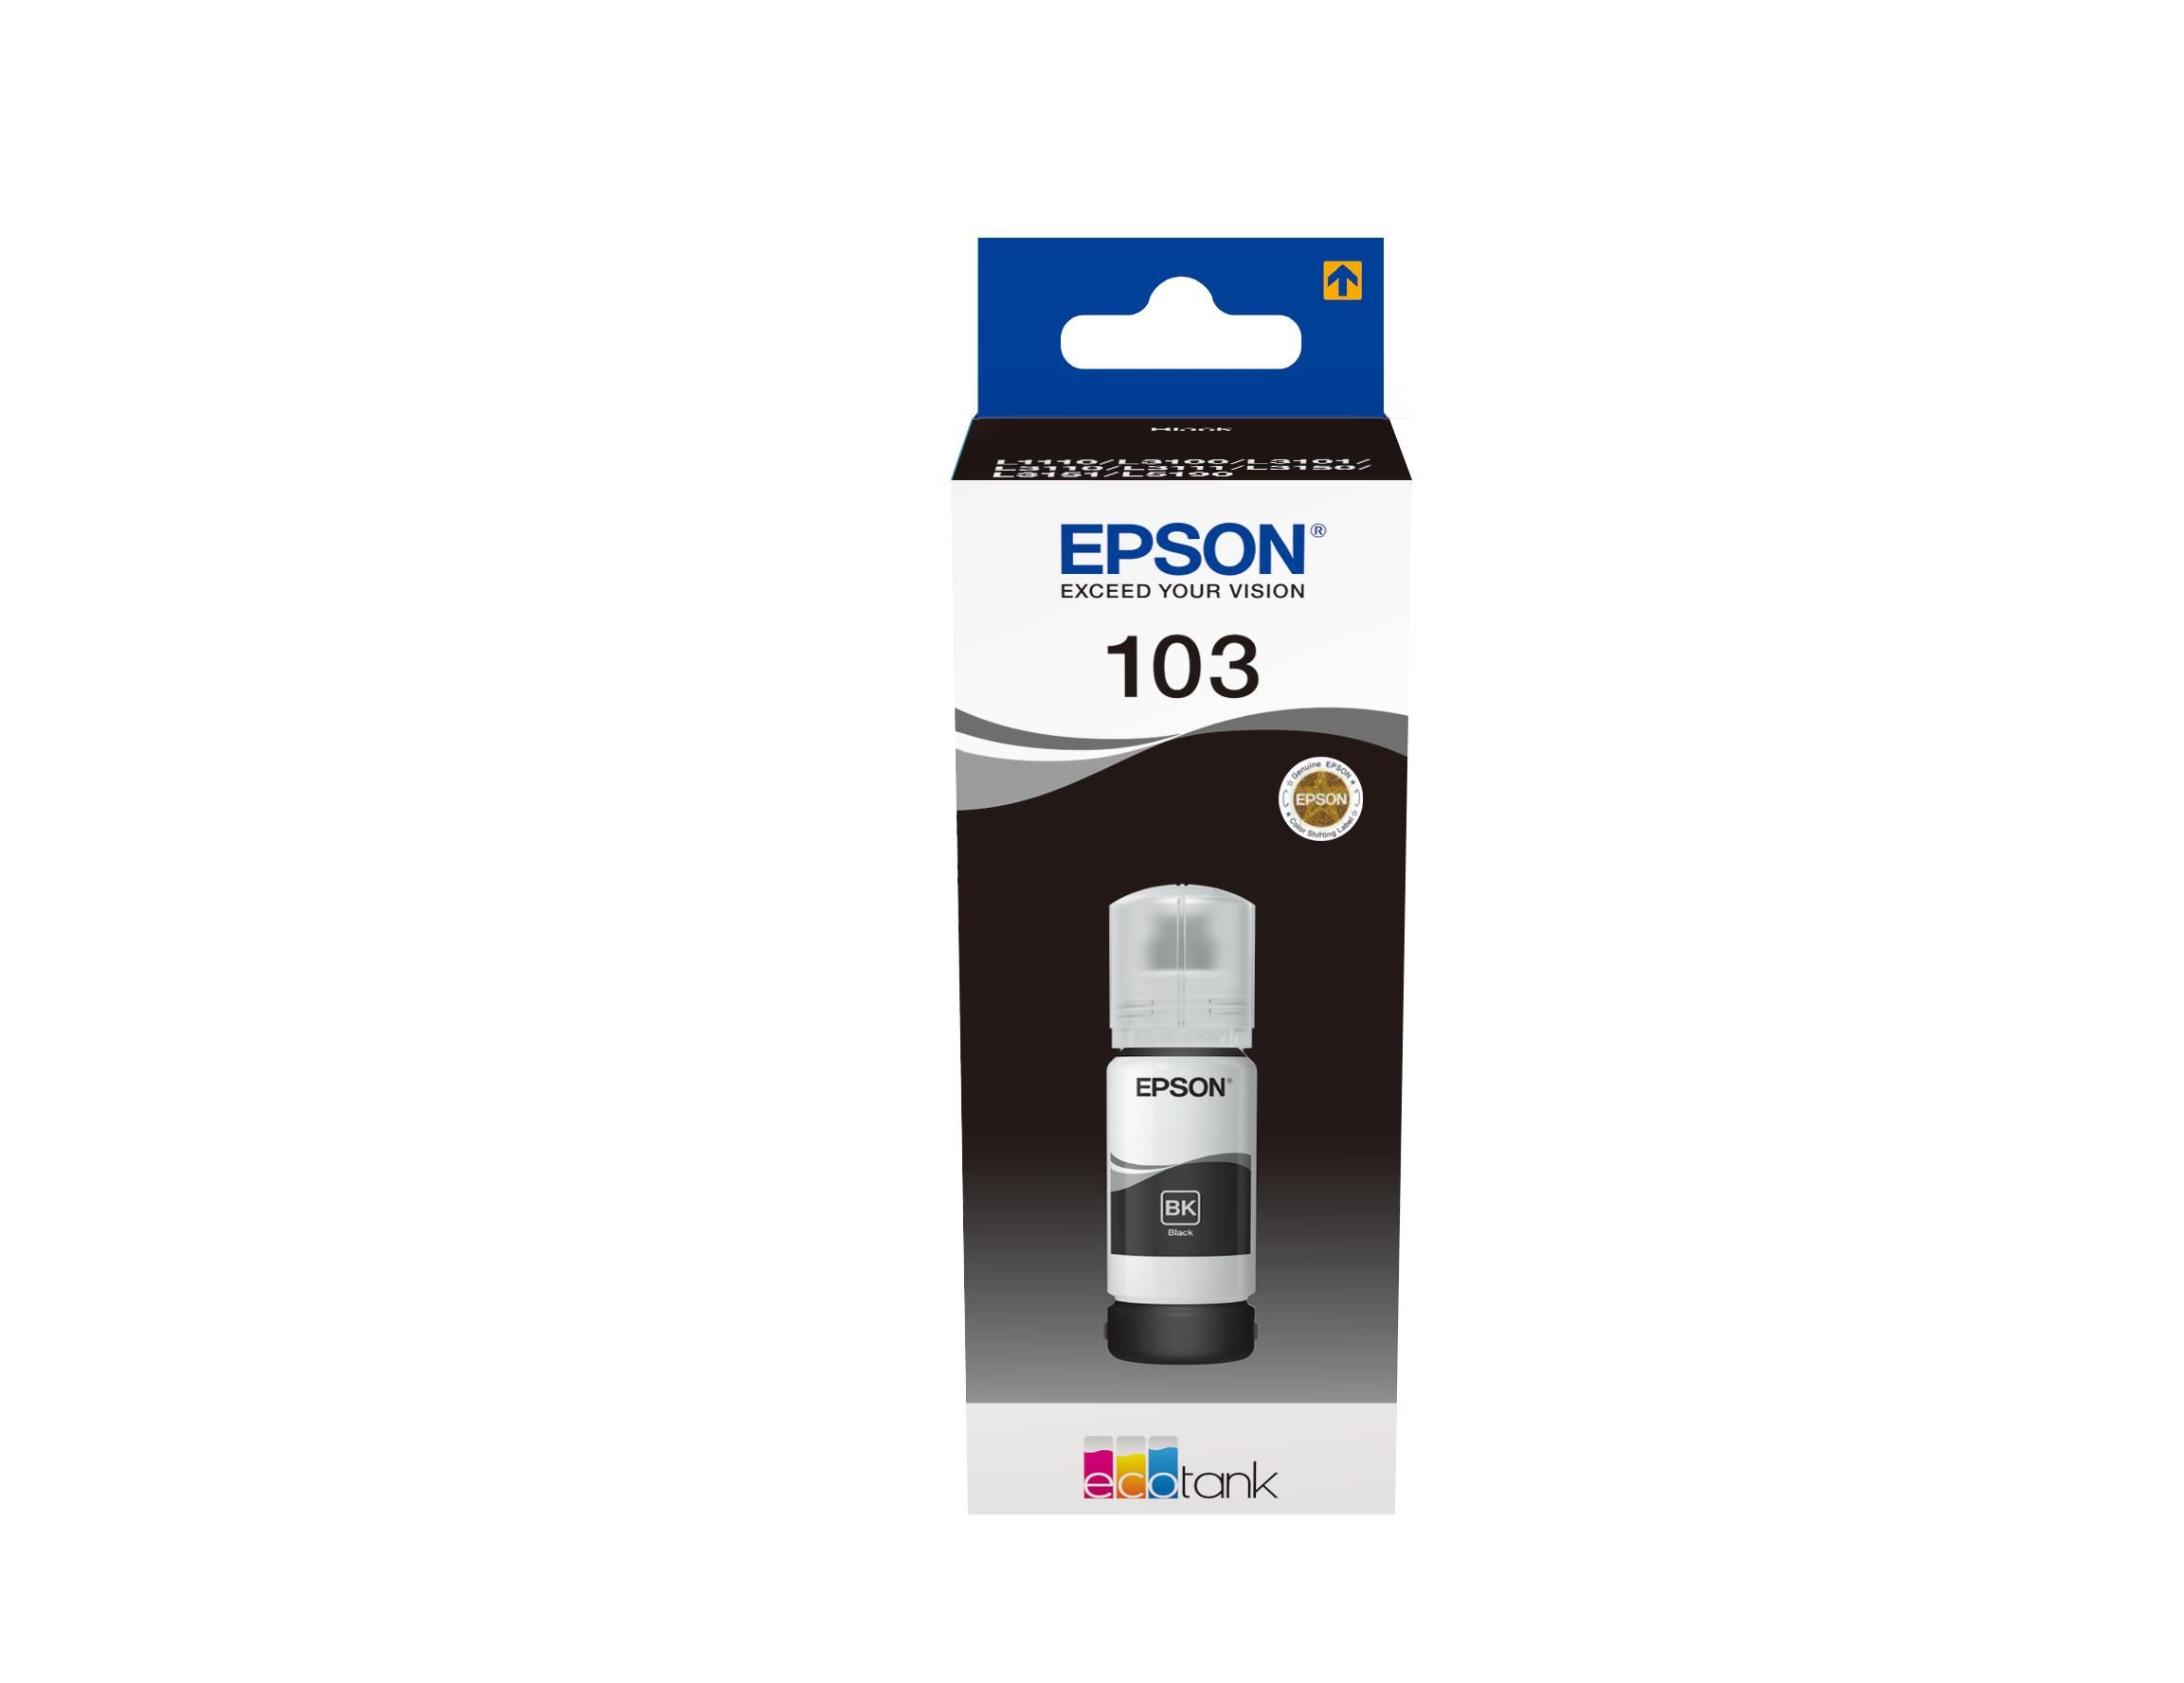 Epson Serie 103 EcoTank